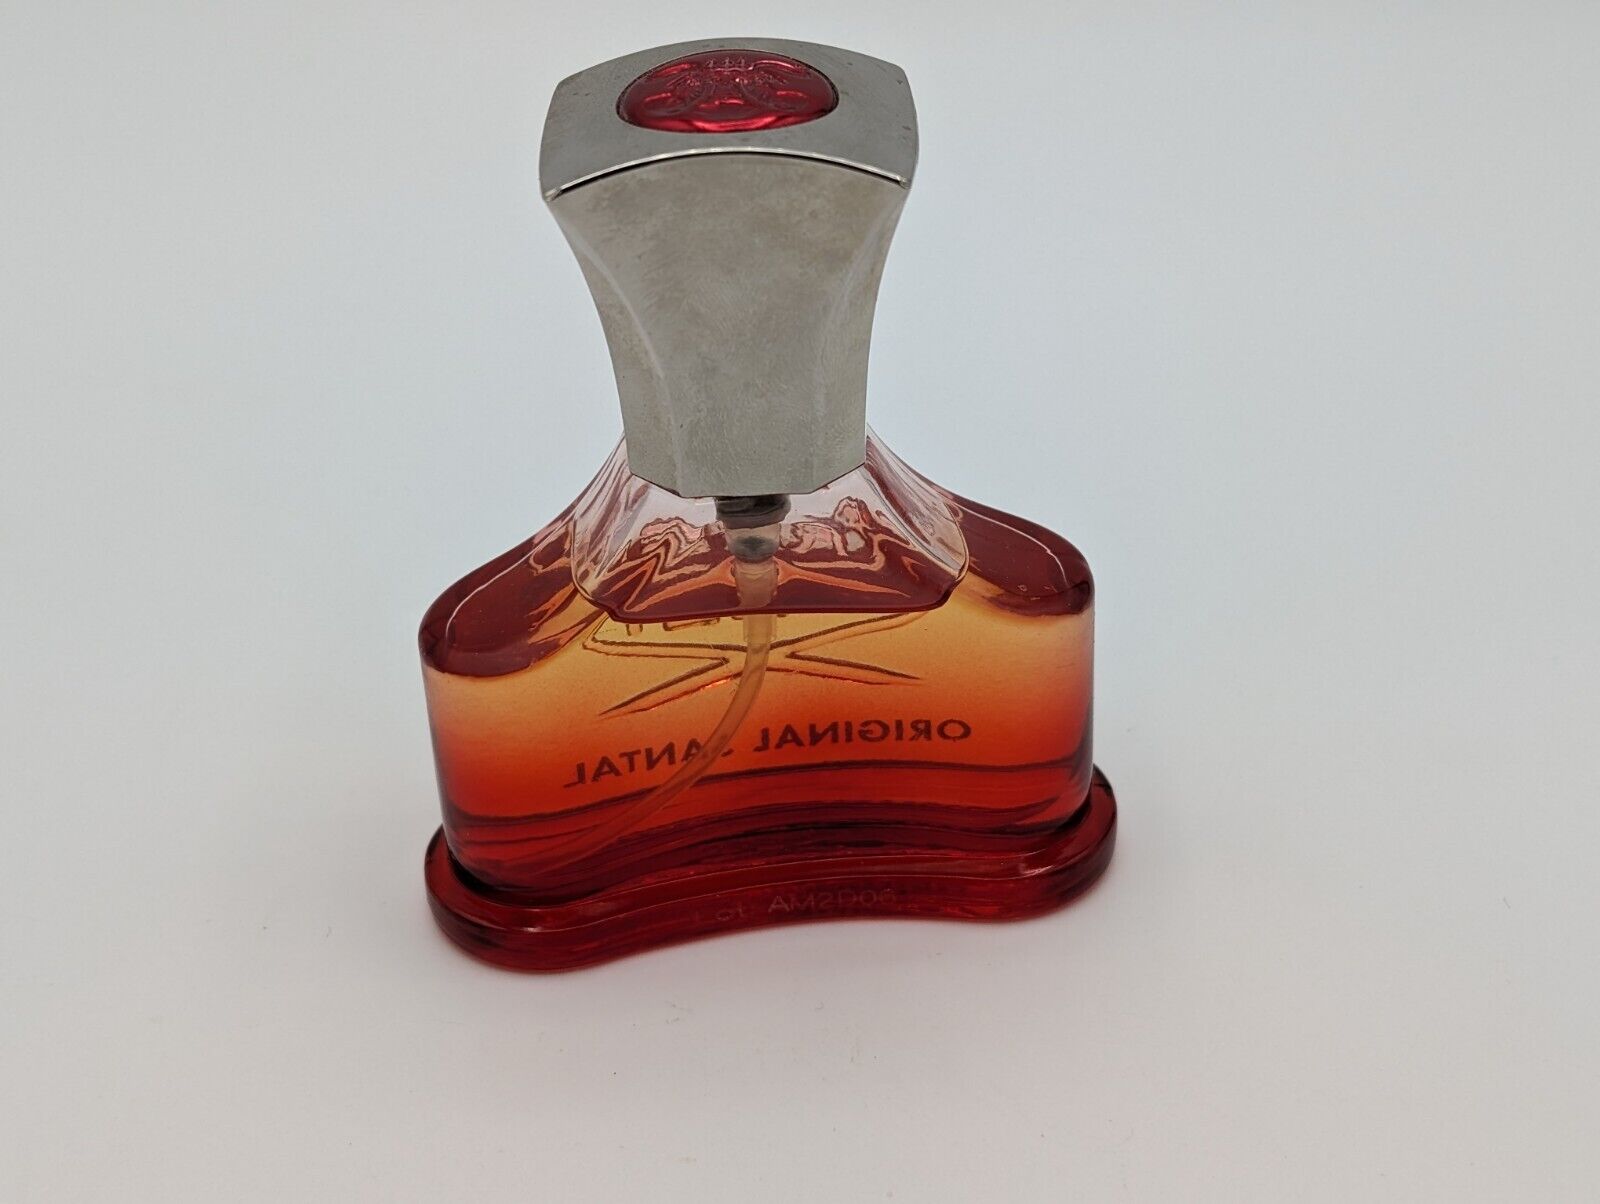 Creed Original Santal 1 fl oz 30ml Perfume 80% Full